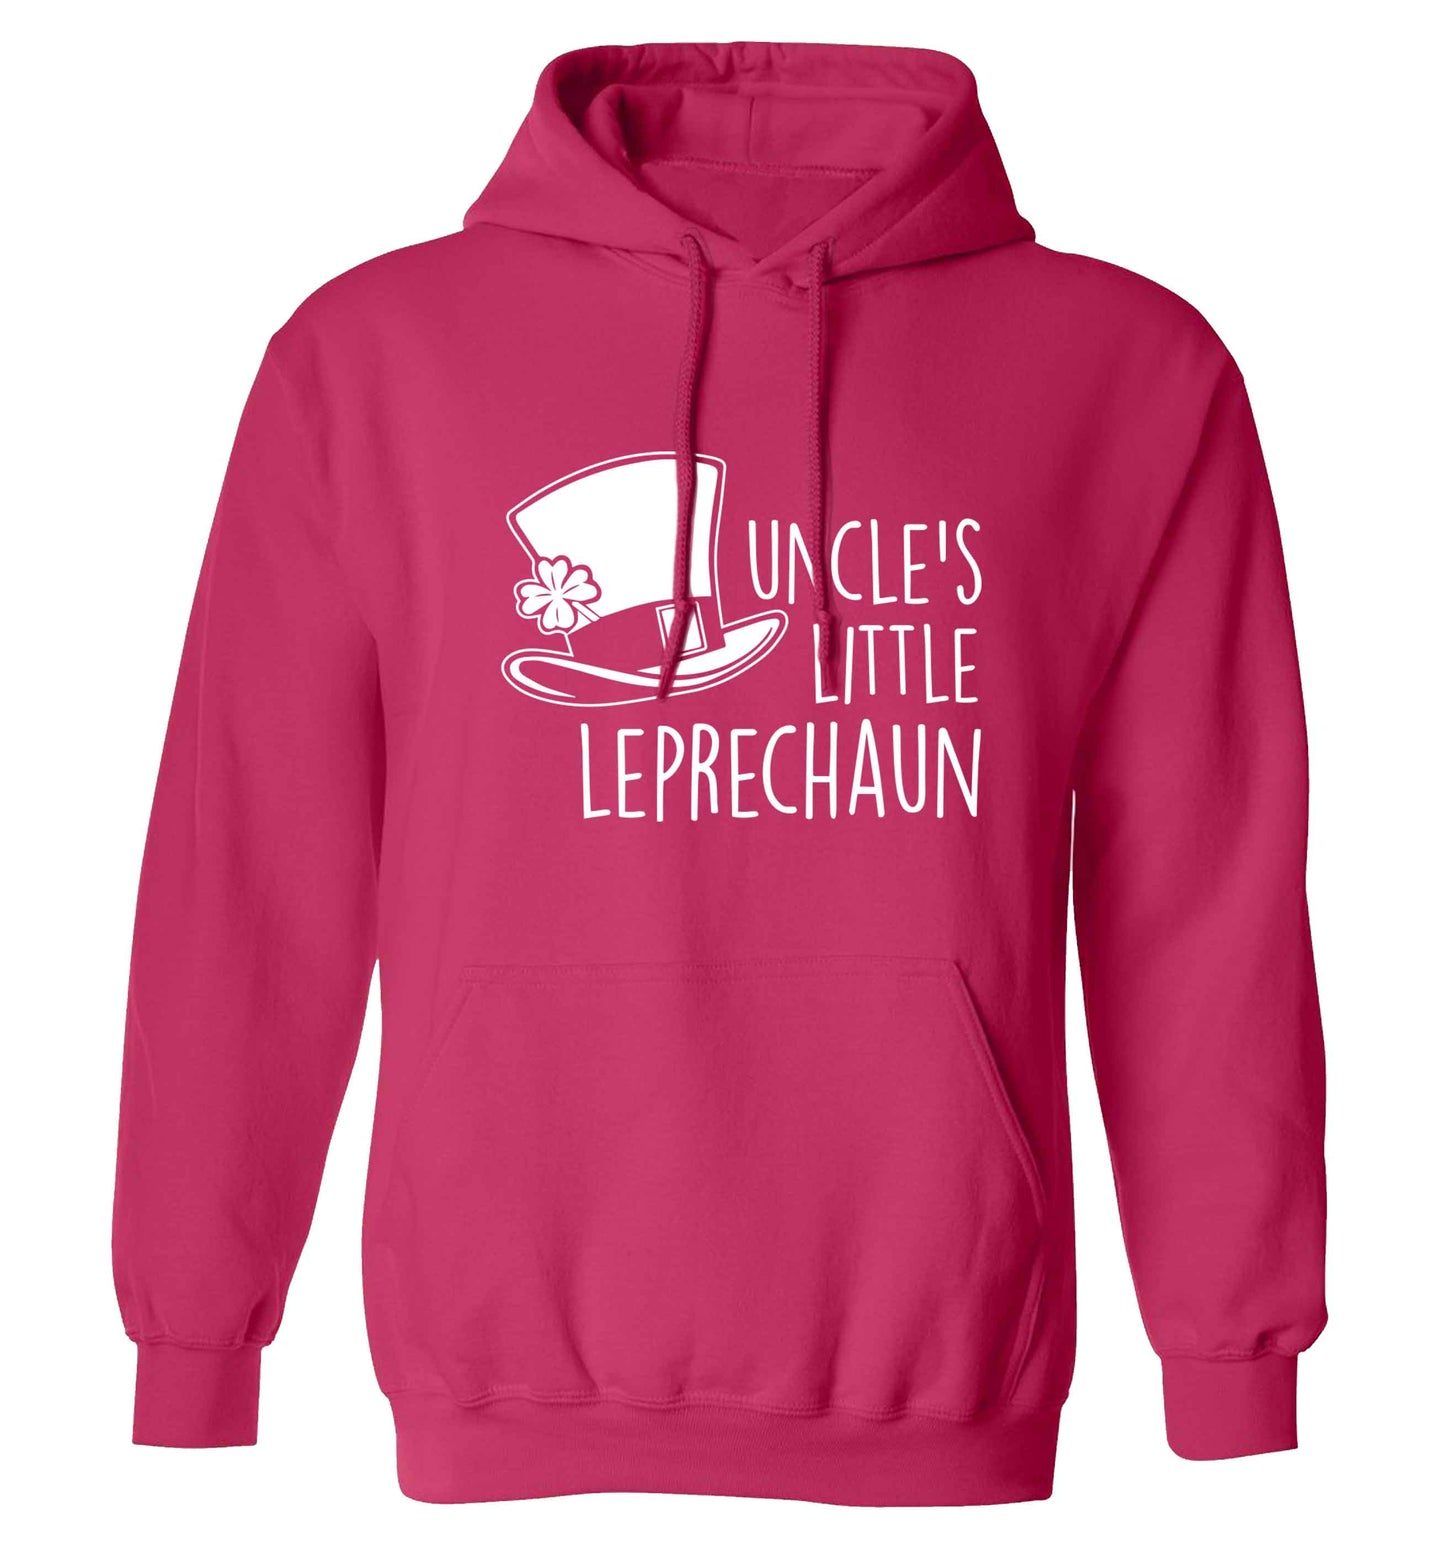 Uncles little leprechaun adults unisex pink hoodie 2XL